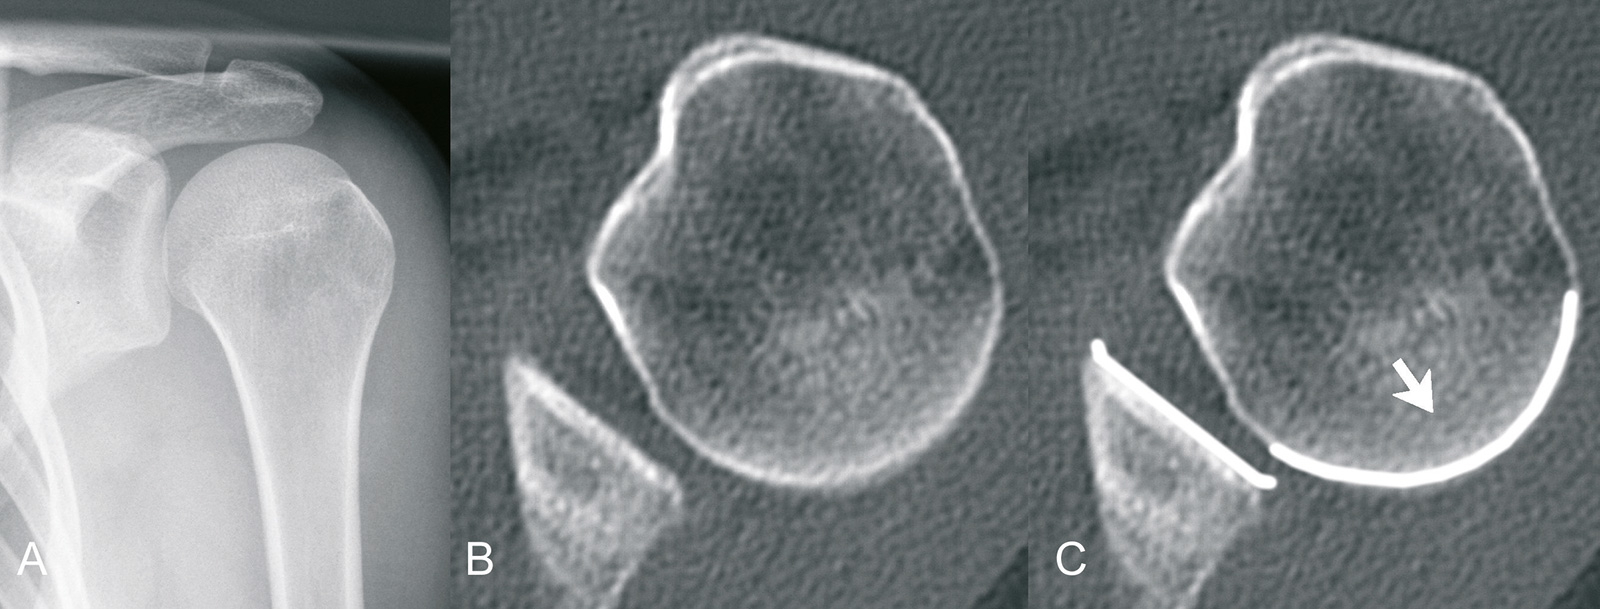 Abb. 2-34: hintere Schulterluxation: geringes „lightbulb sign“ in der Röntgenbildgebung (A), Subluxation in der Computertomografie (B,C)